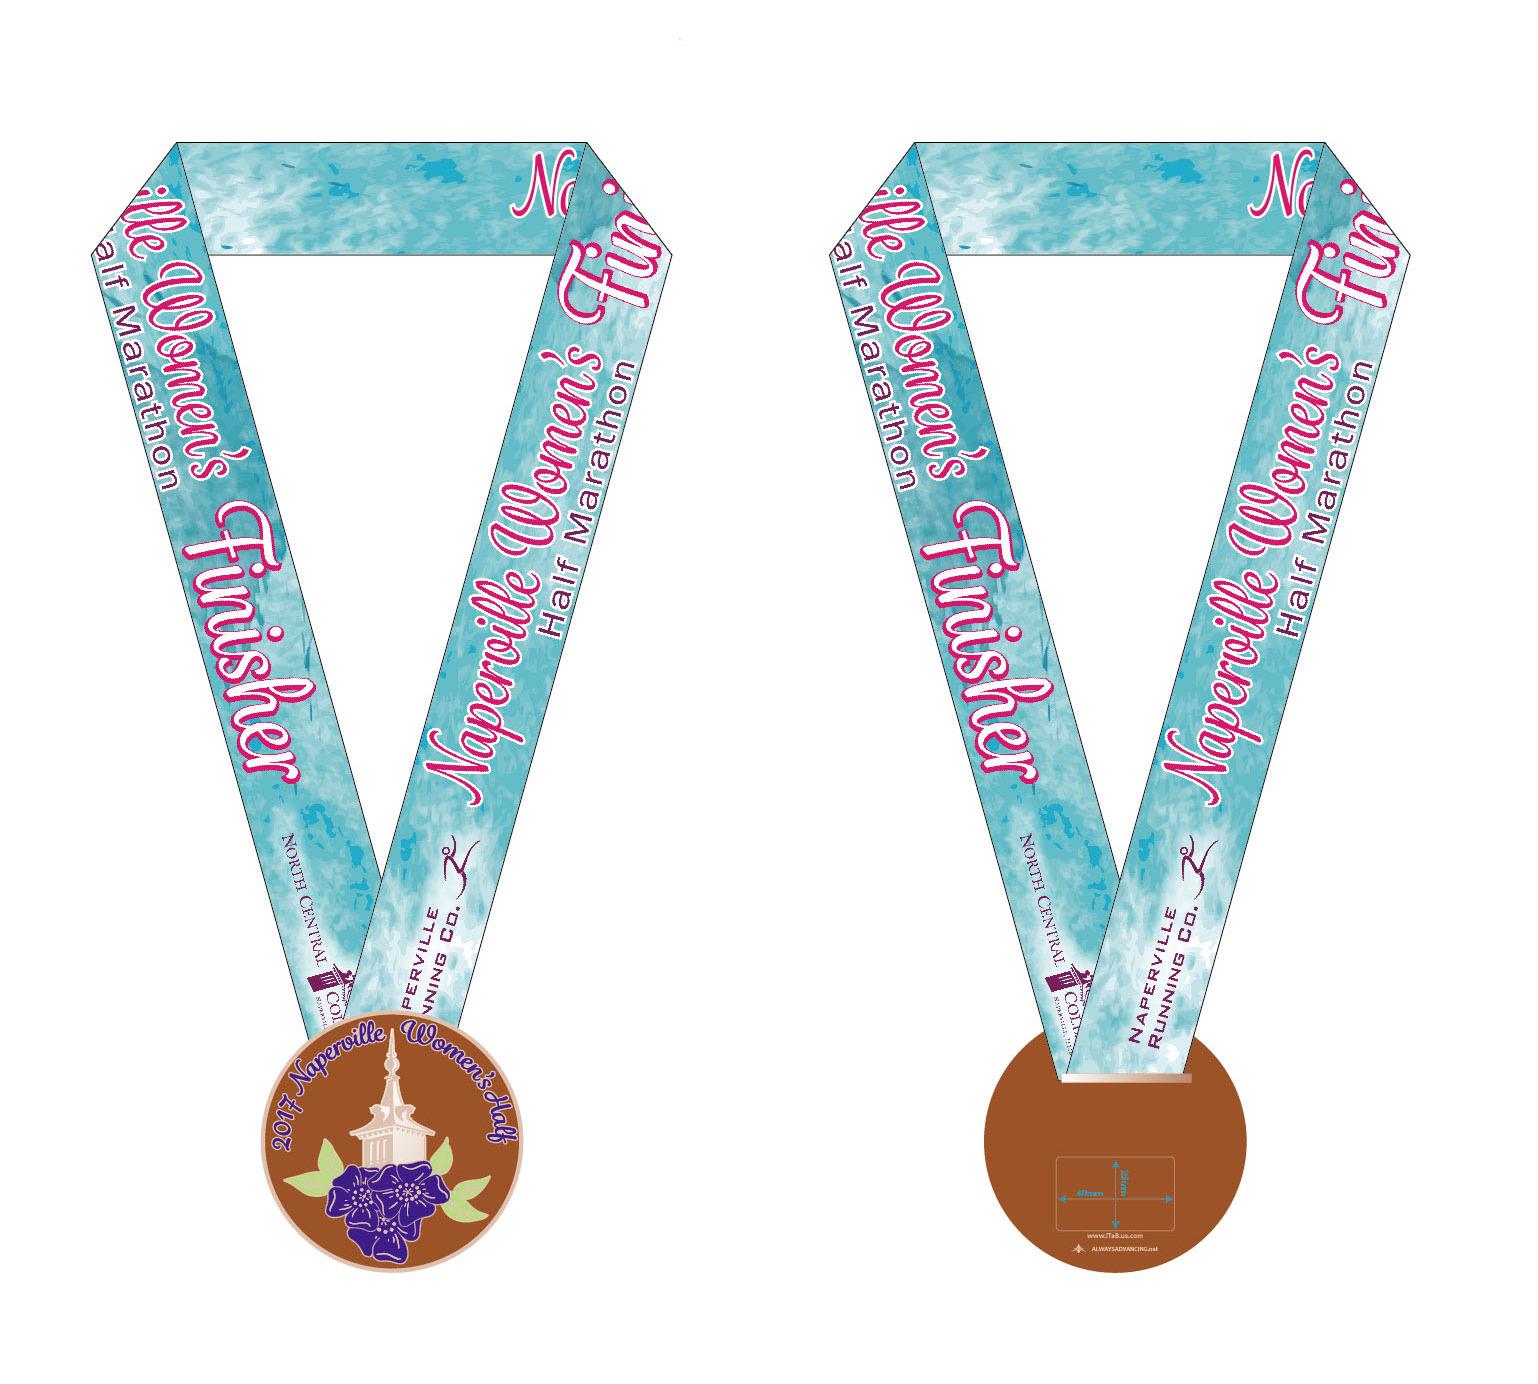 2017 Naperville Women’s Half Marathon & 5K Finisher Medals Revealed